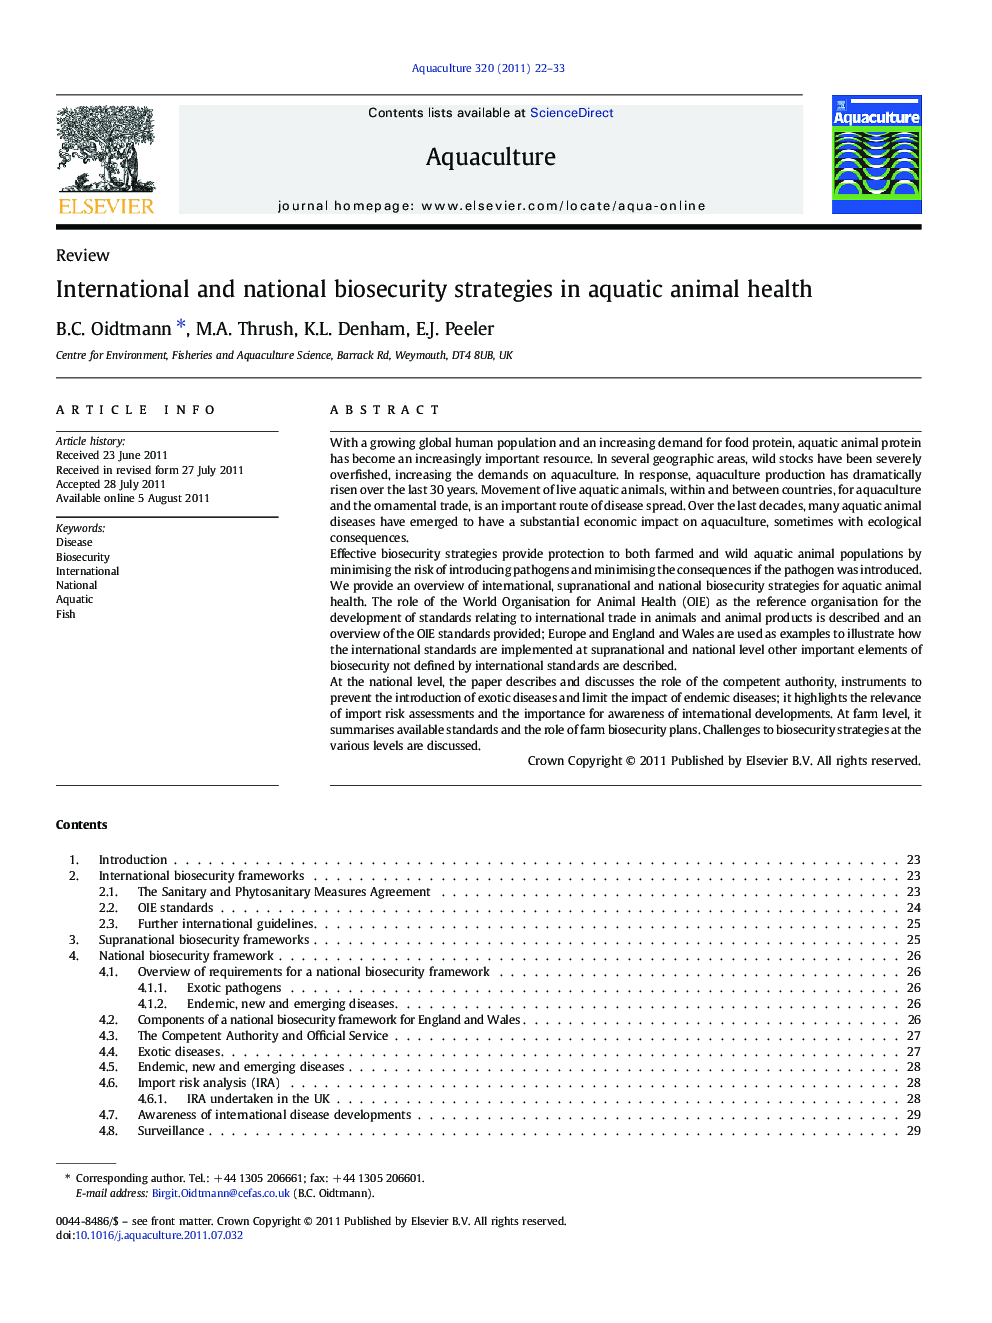 International and national biosecurity strategies in aquatic animal health